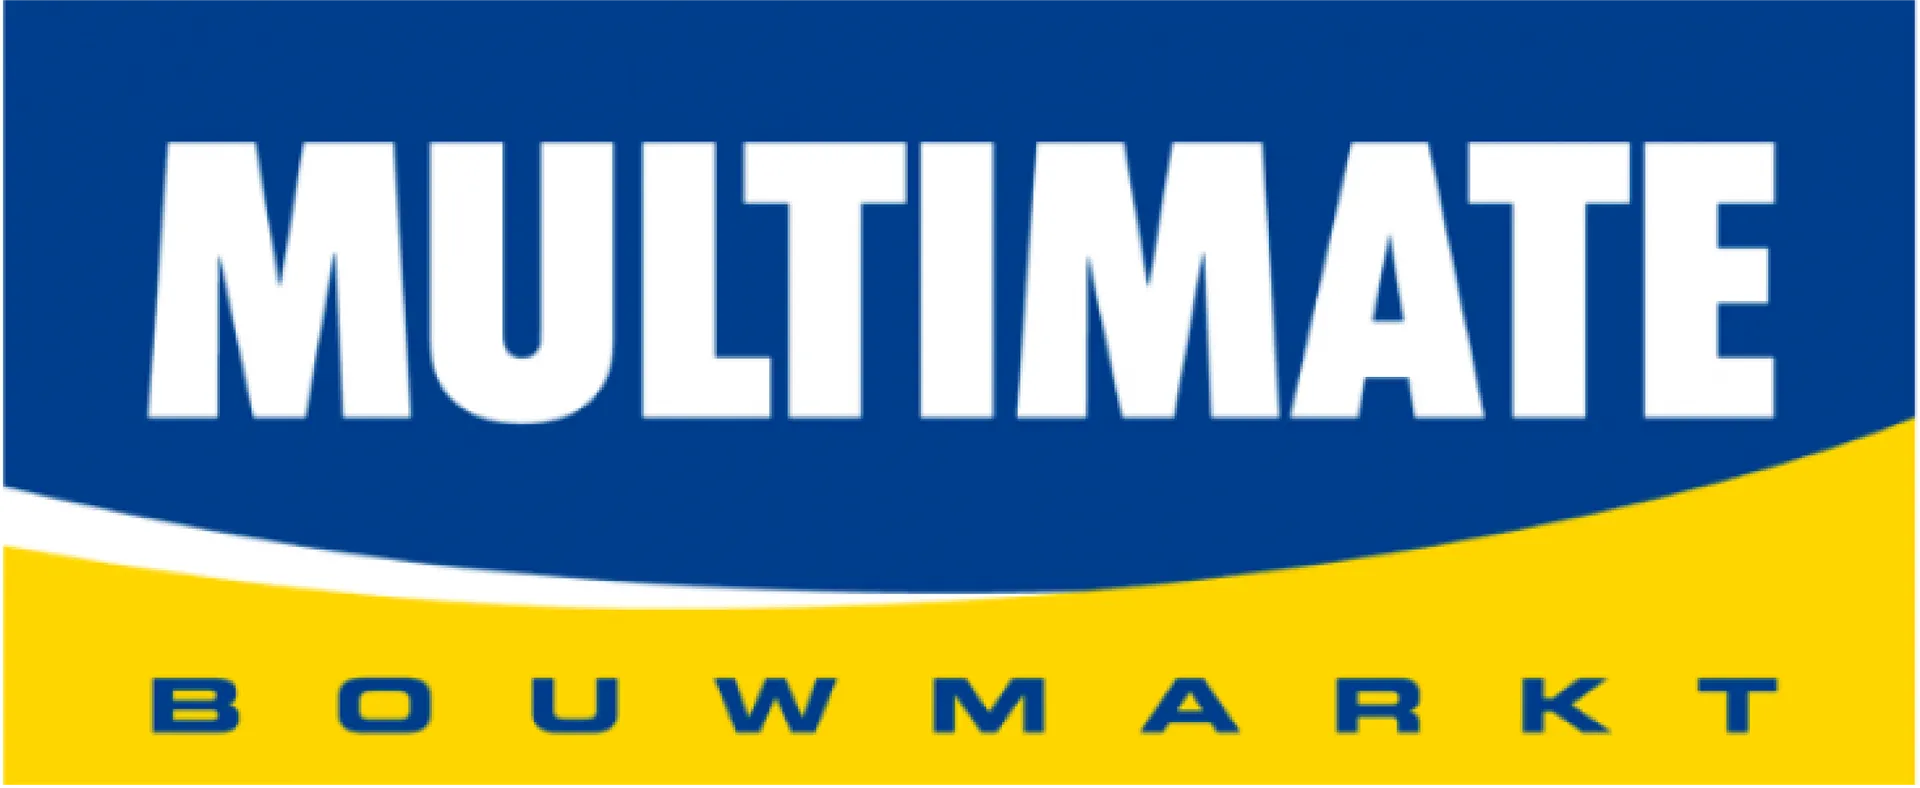 MULTIMATE logo